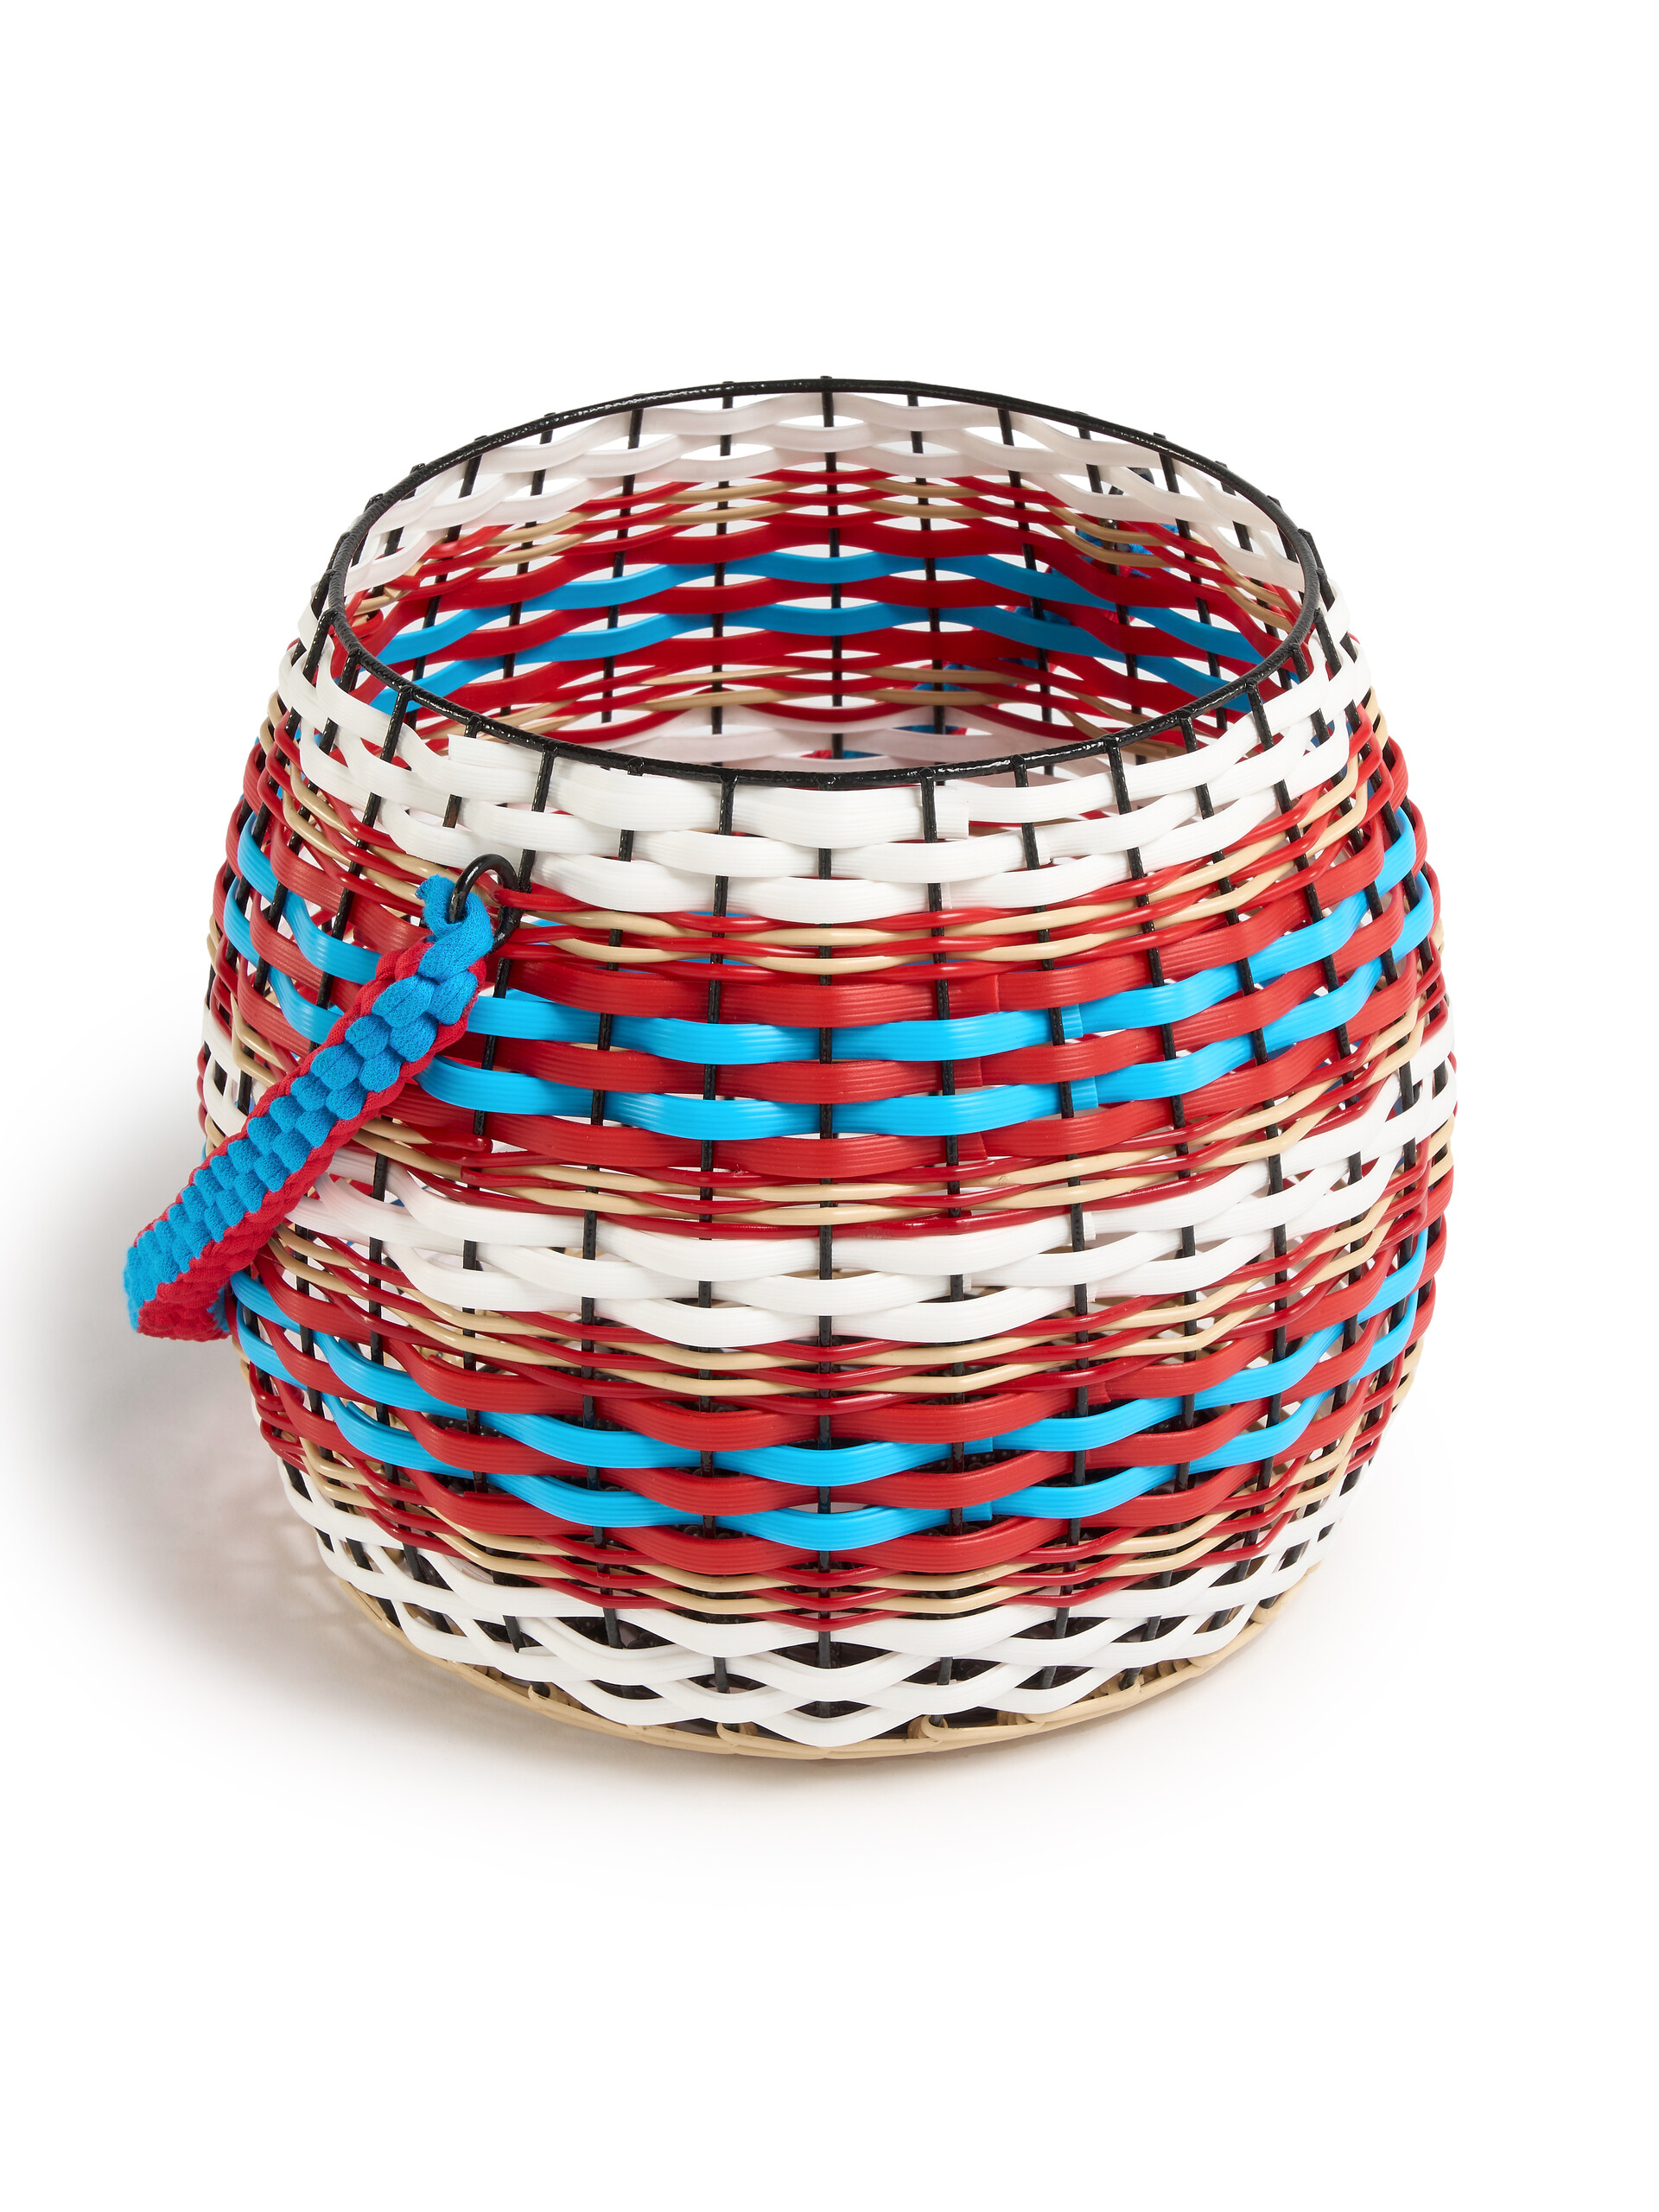 Orange and white MARNI MARKET woven cable basket - Accessories - Image 3